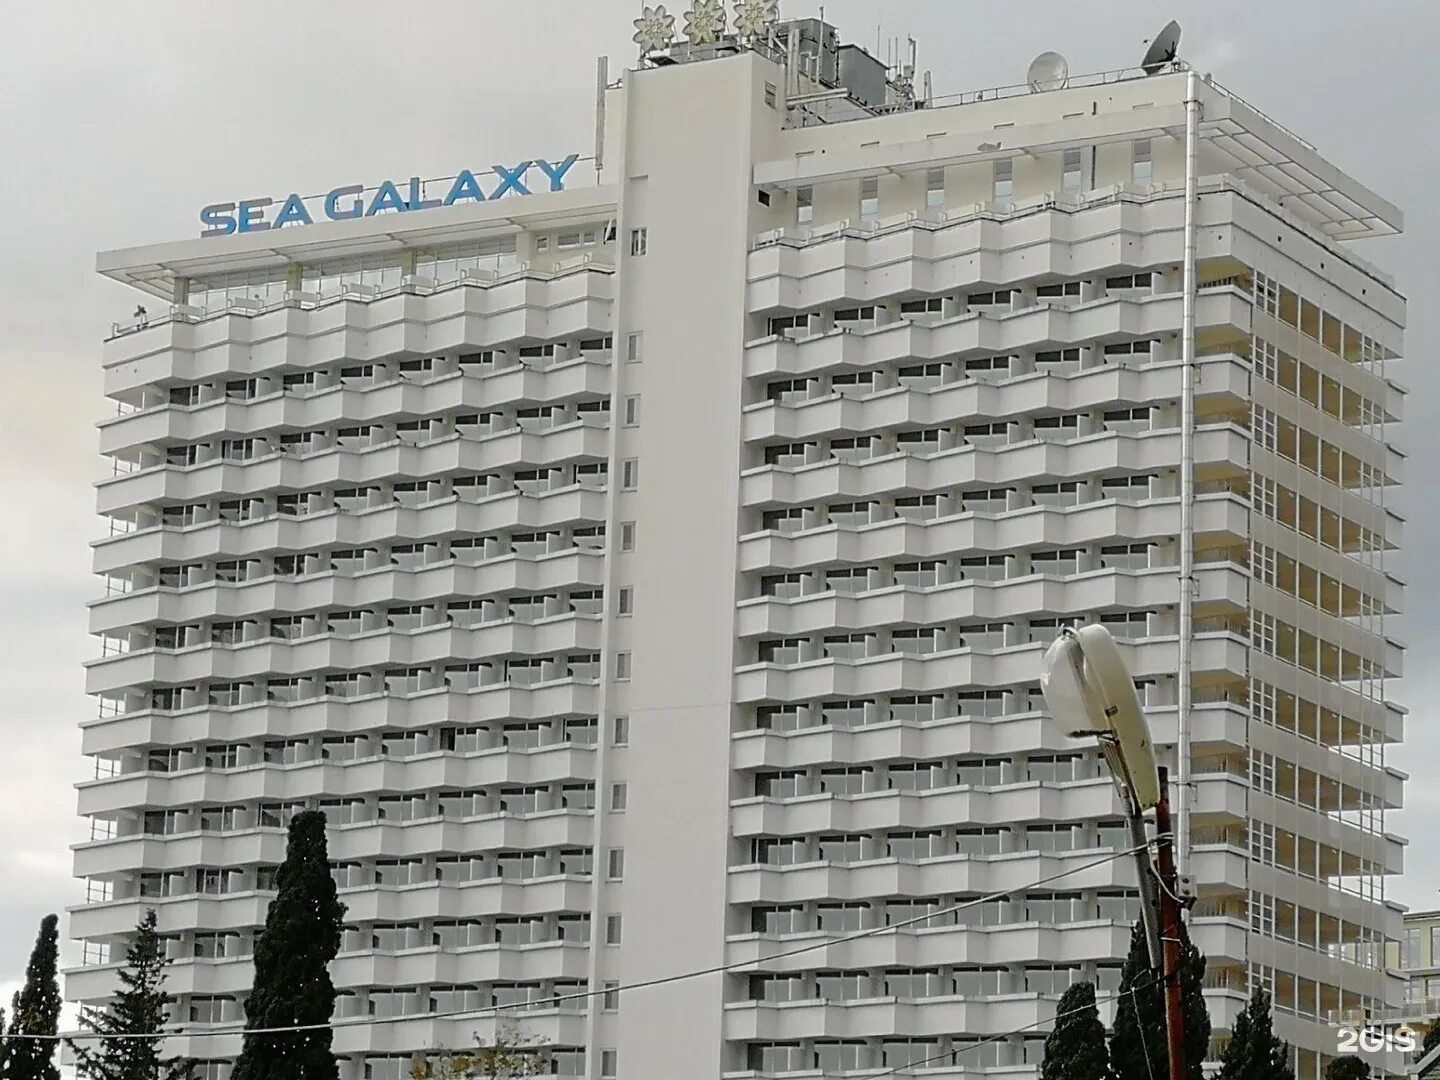 Congress отель сочи. Си Гэлакси Сочи. Гостиница си галакси Сочи. Отель Сочи Sea Galaxy Hotel. Sea Galaxy Hotel Congress & Spa 4*.